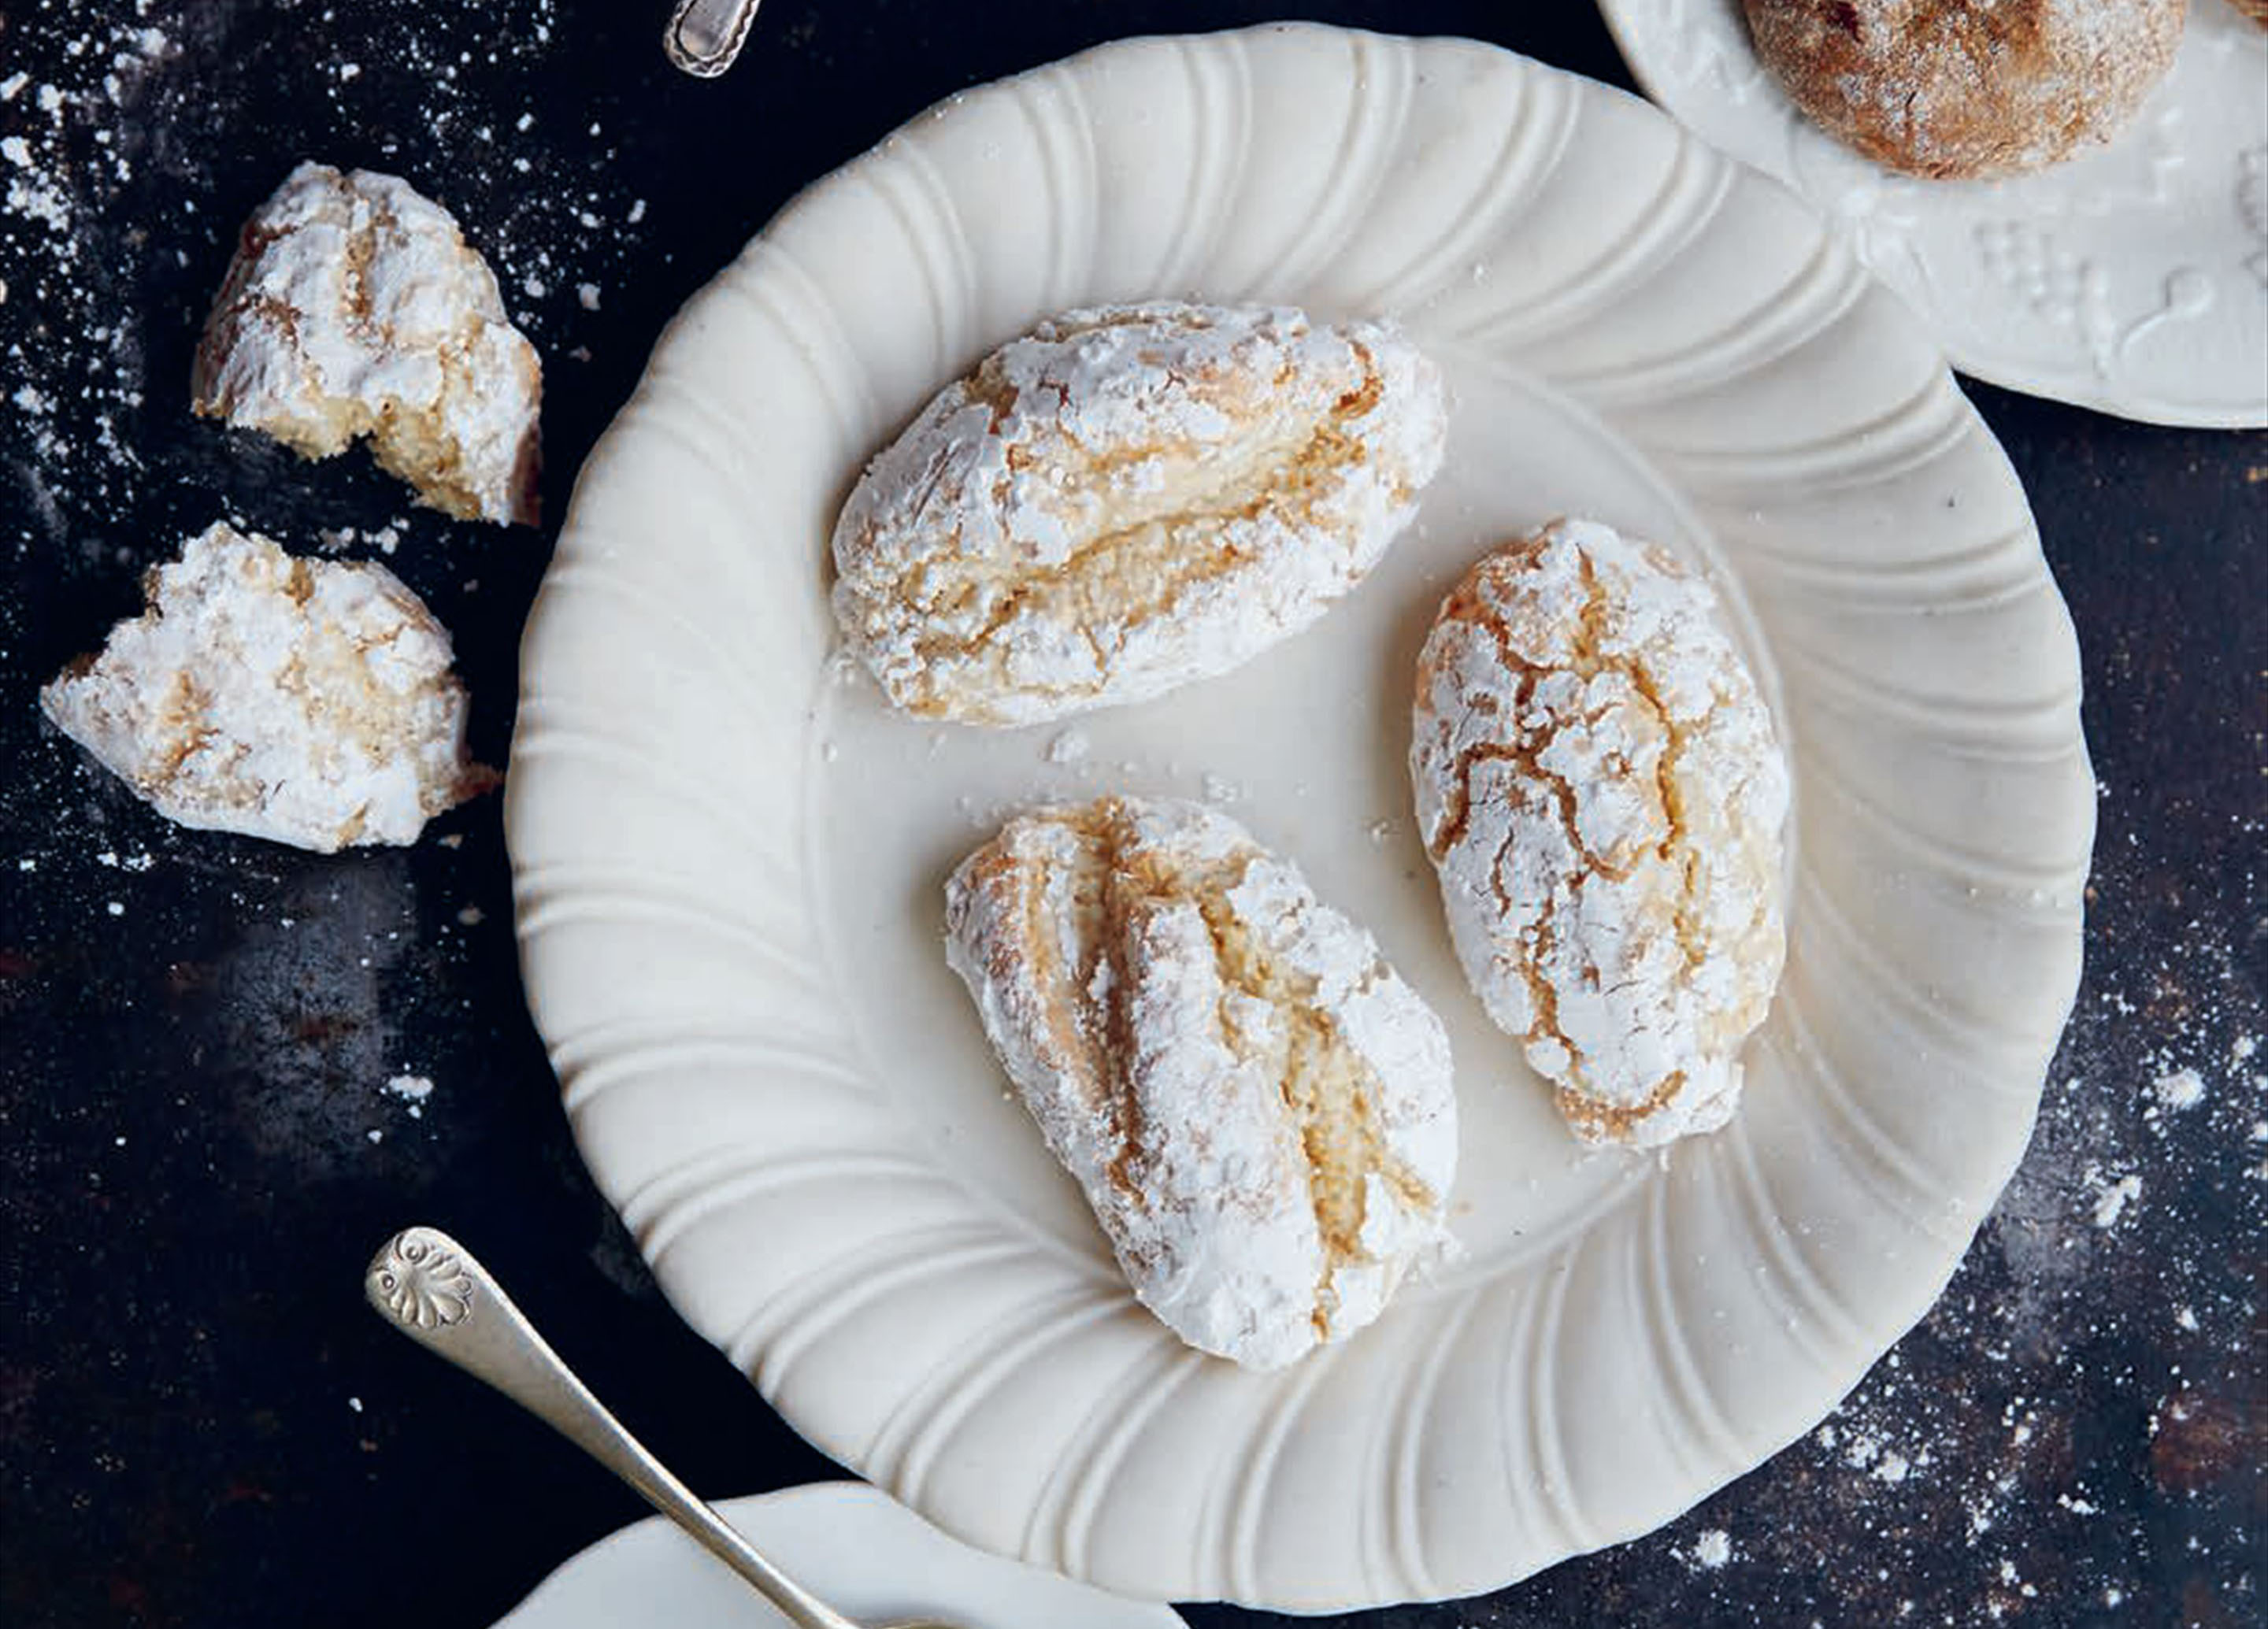 Sienese almond biscuits